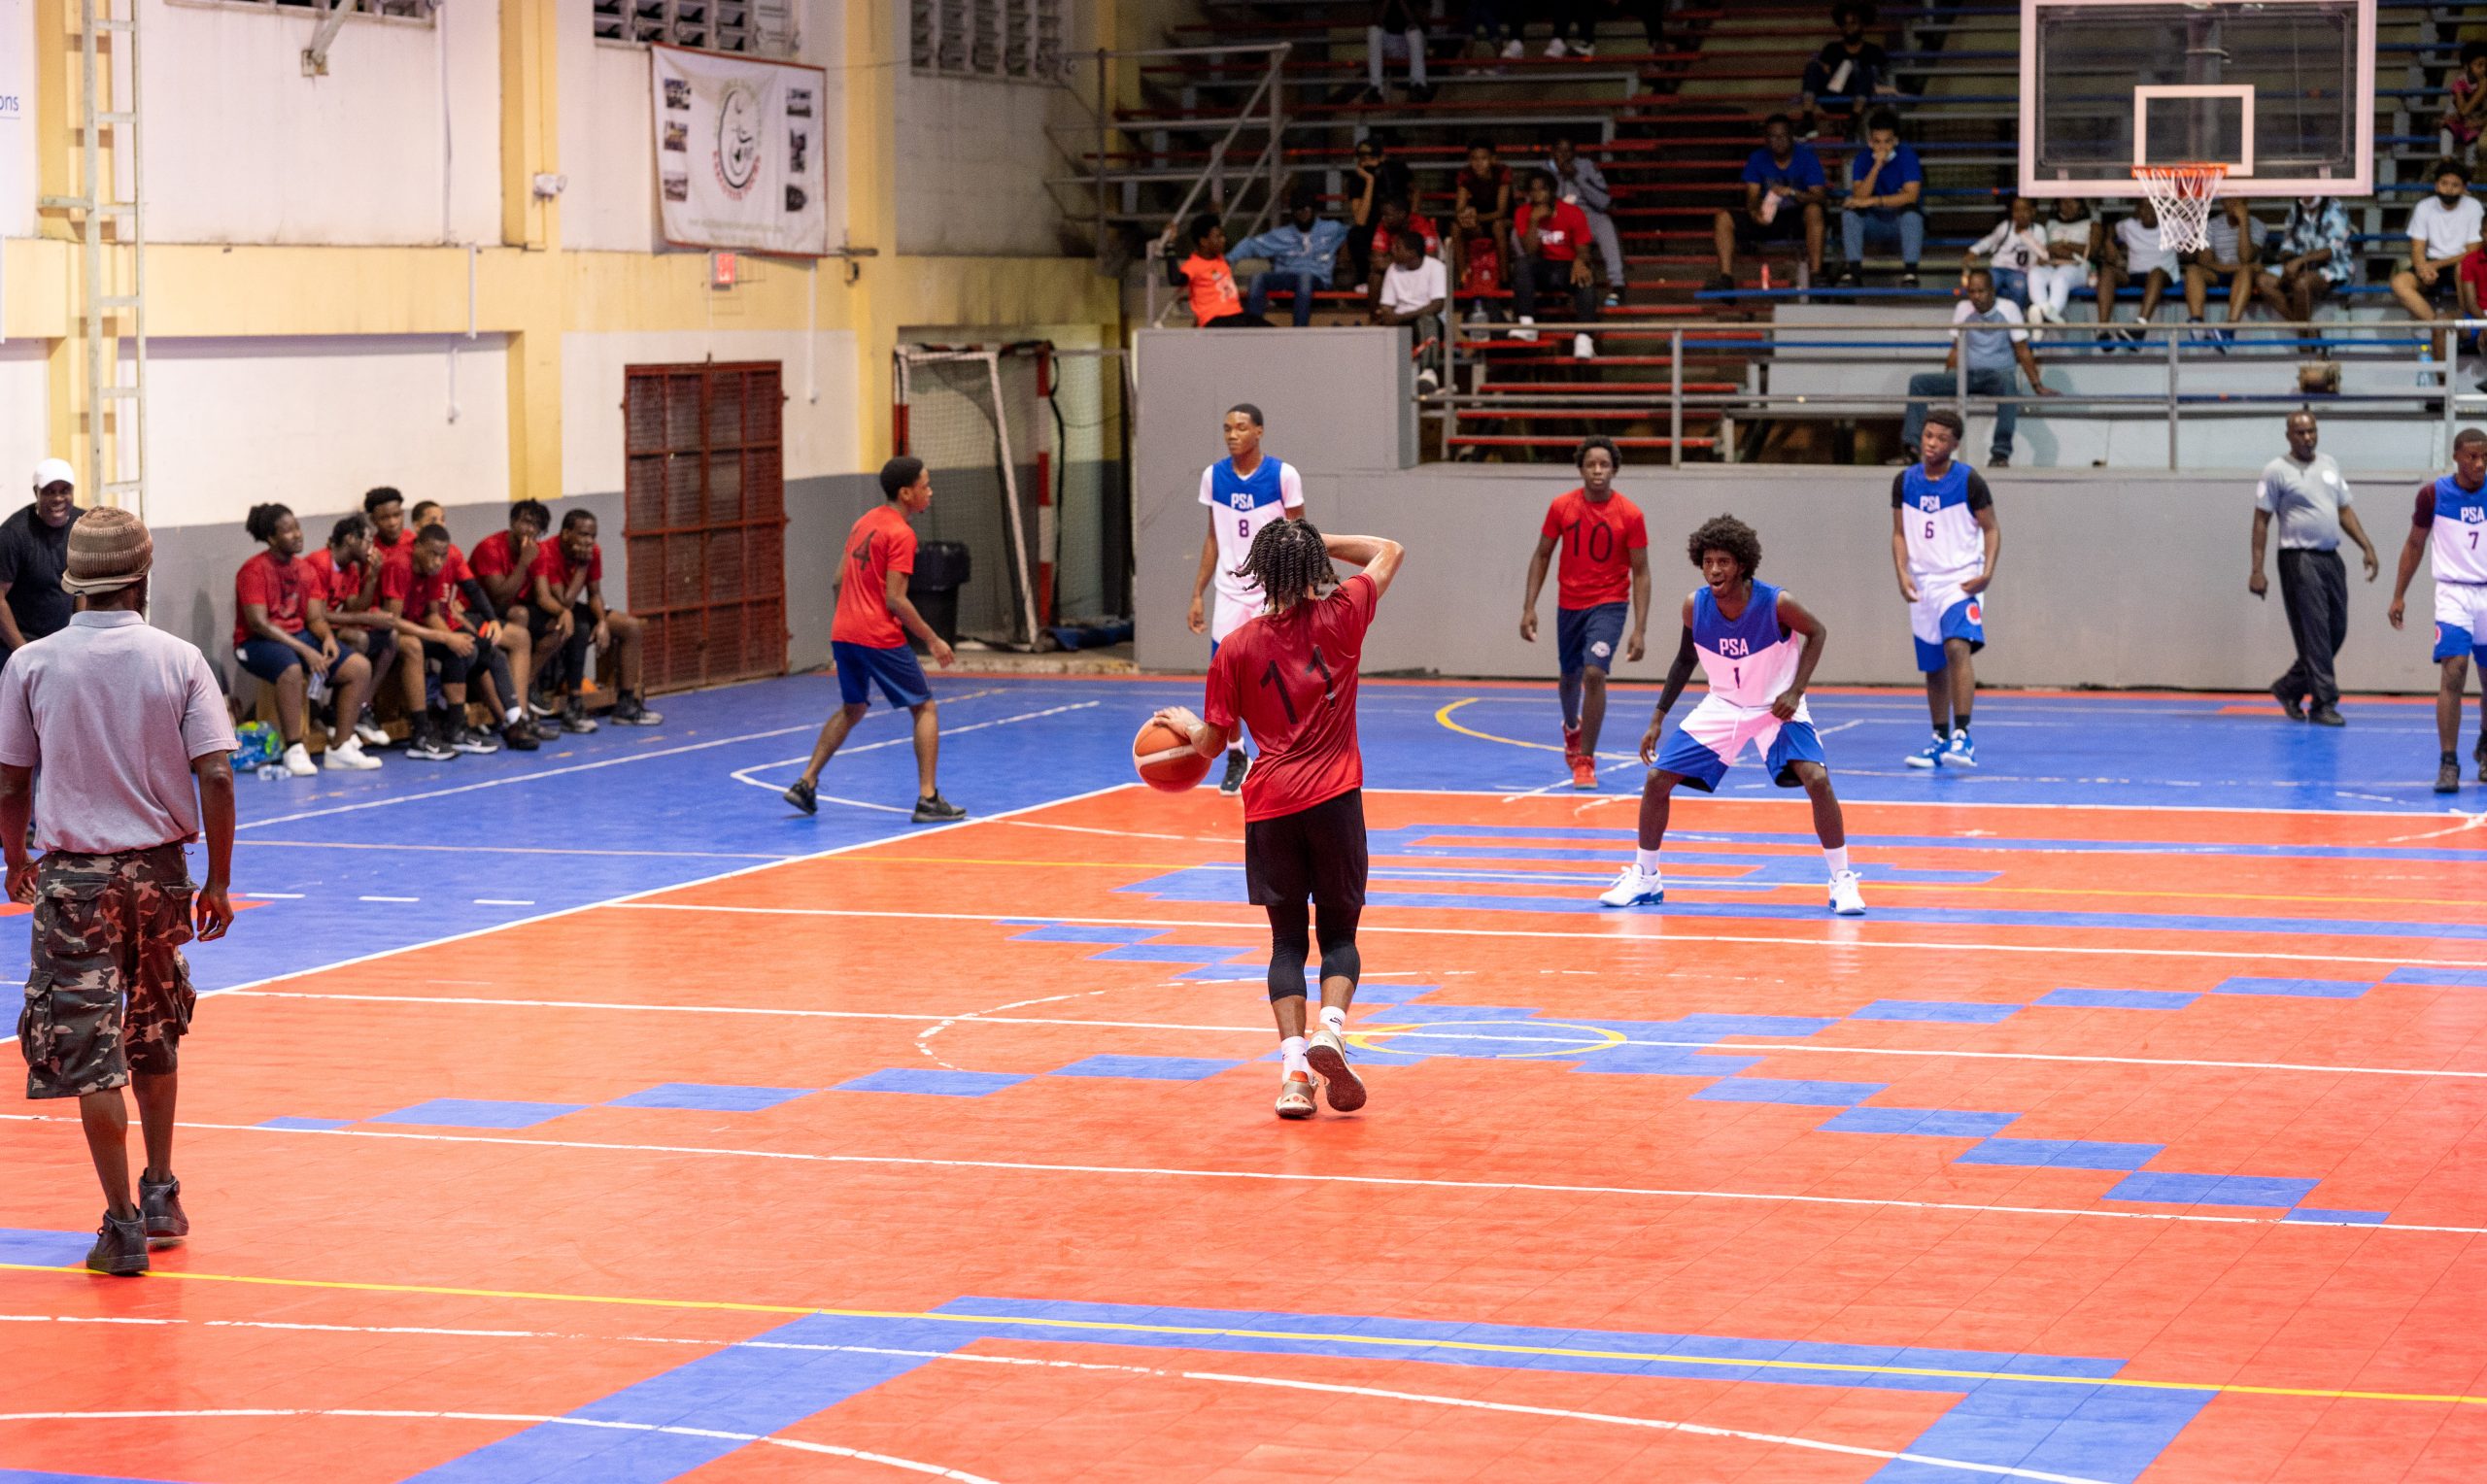 Soualiga Youth Basketball Association (SYBA) has jumpstarted basketball for youth